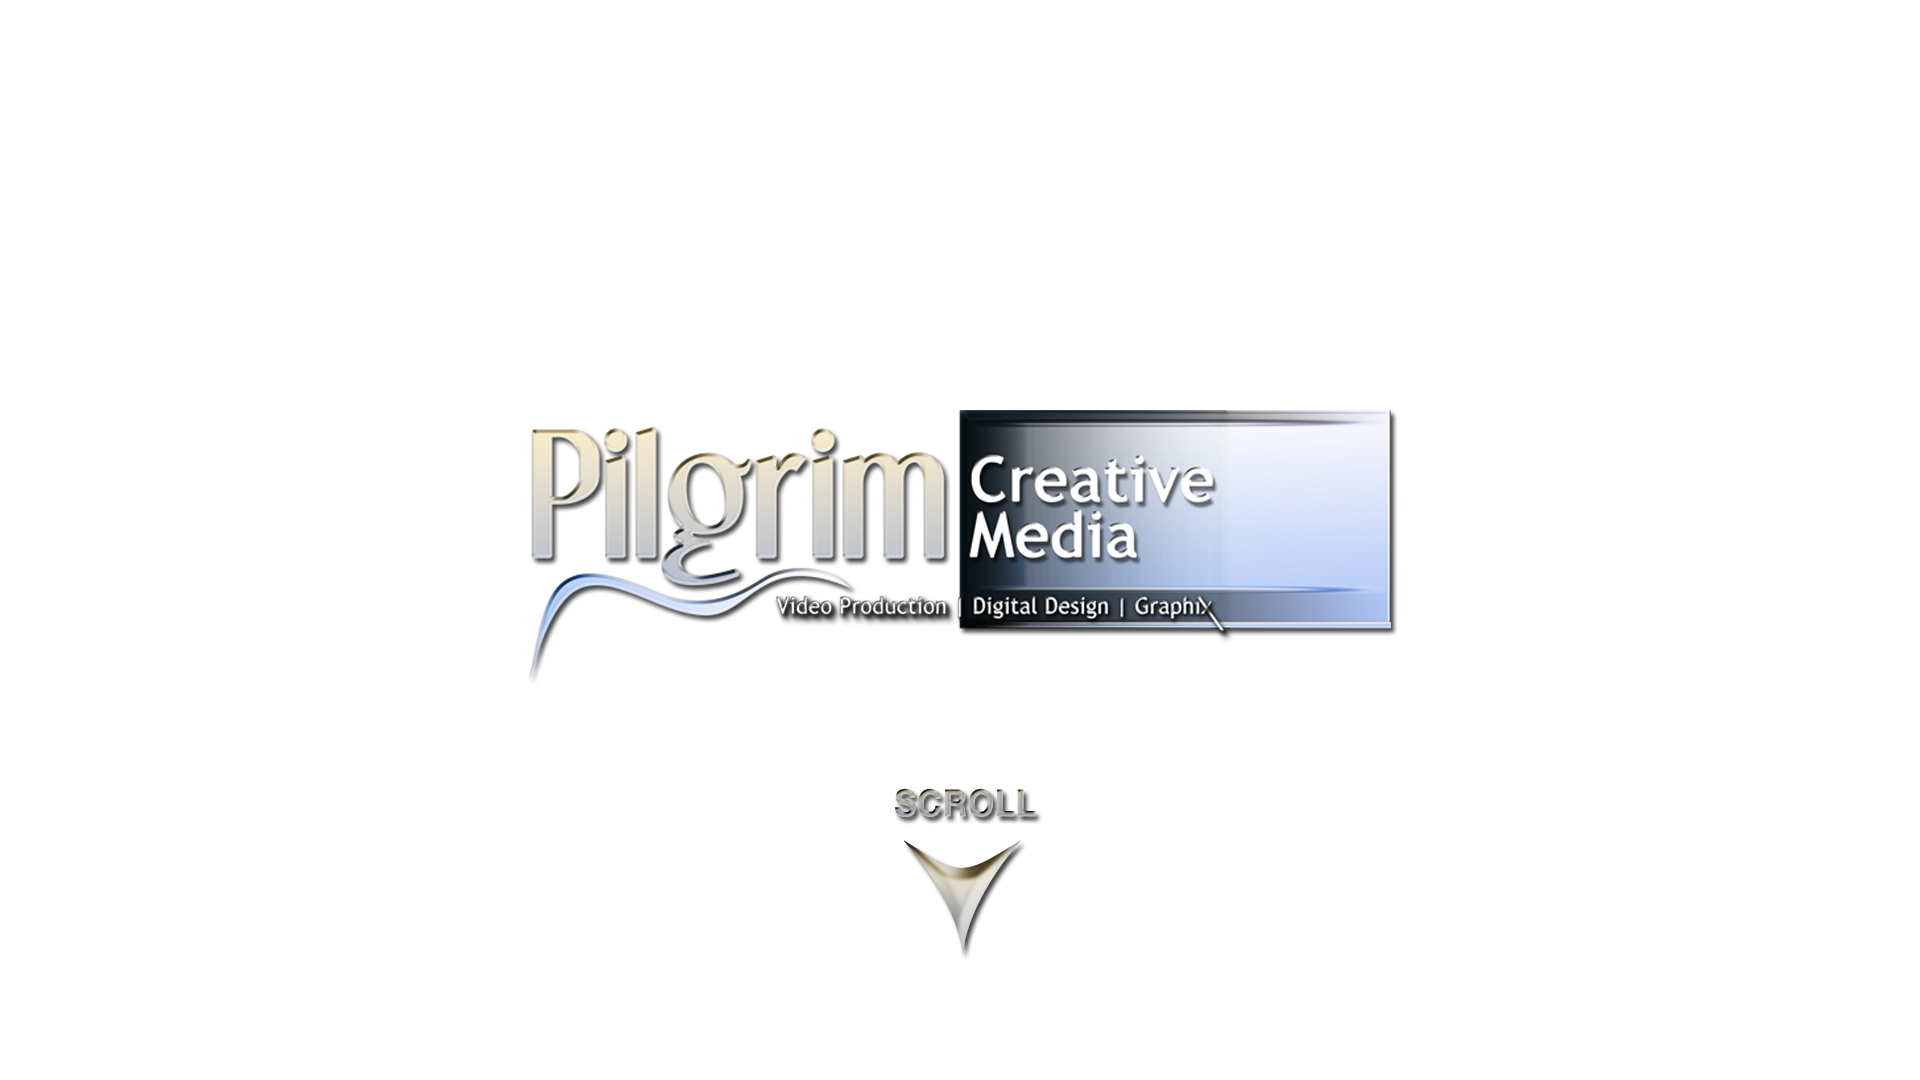 Pilgrim Creative Media - scroll down for more